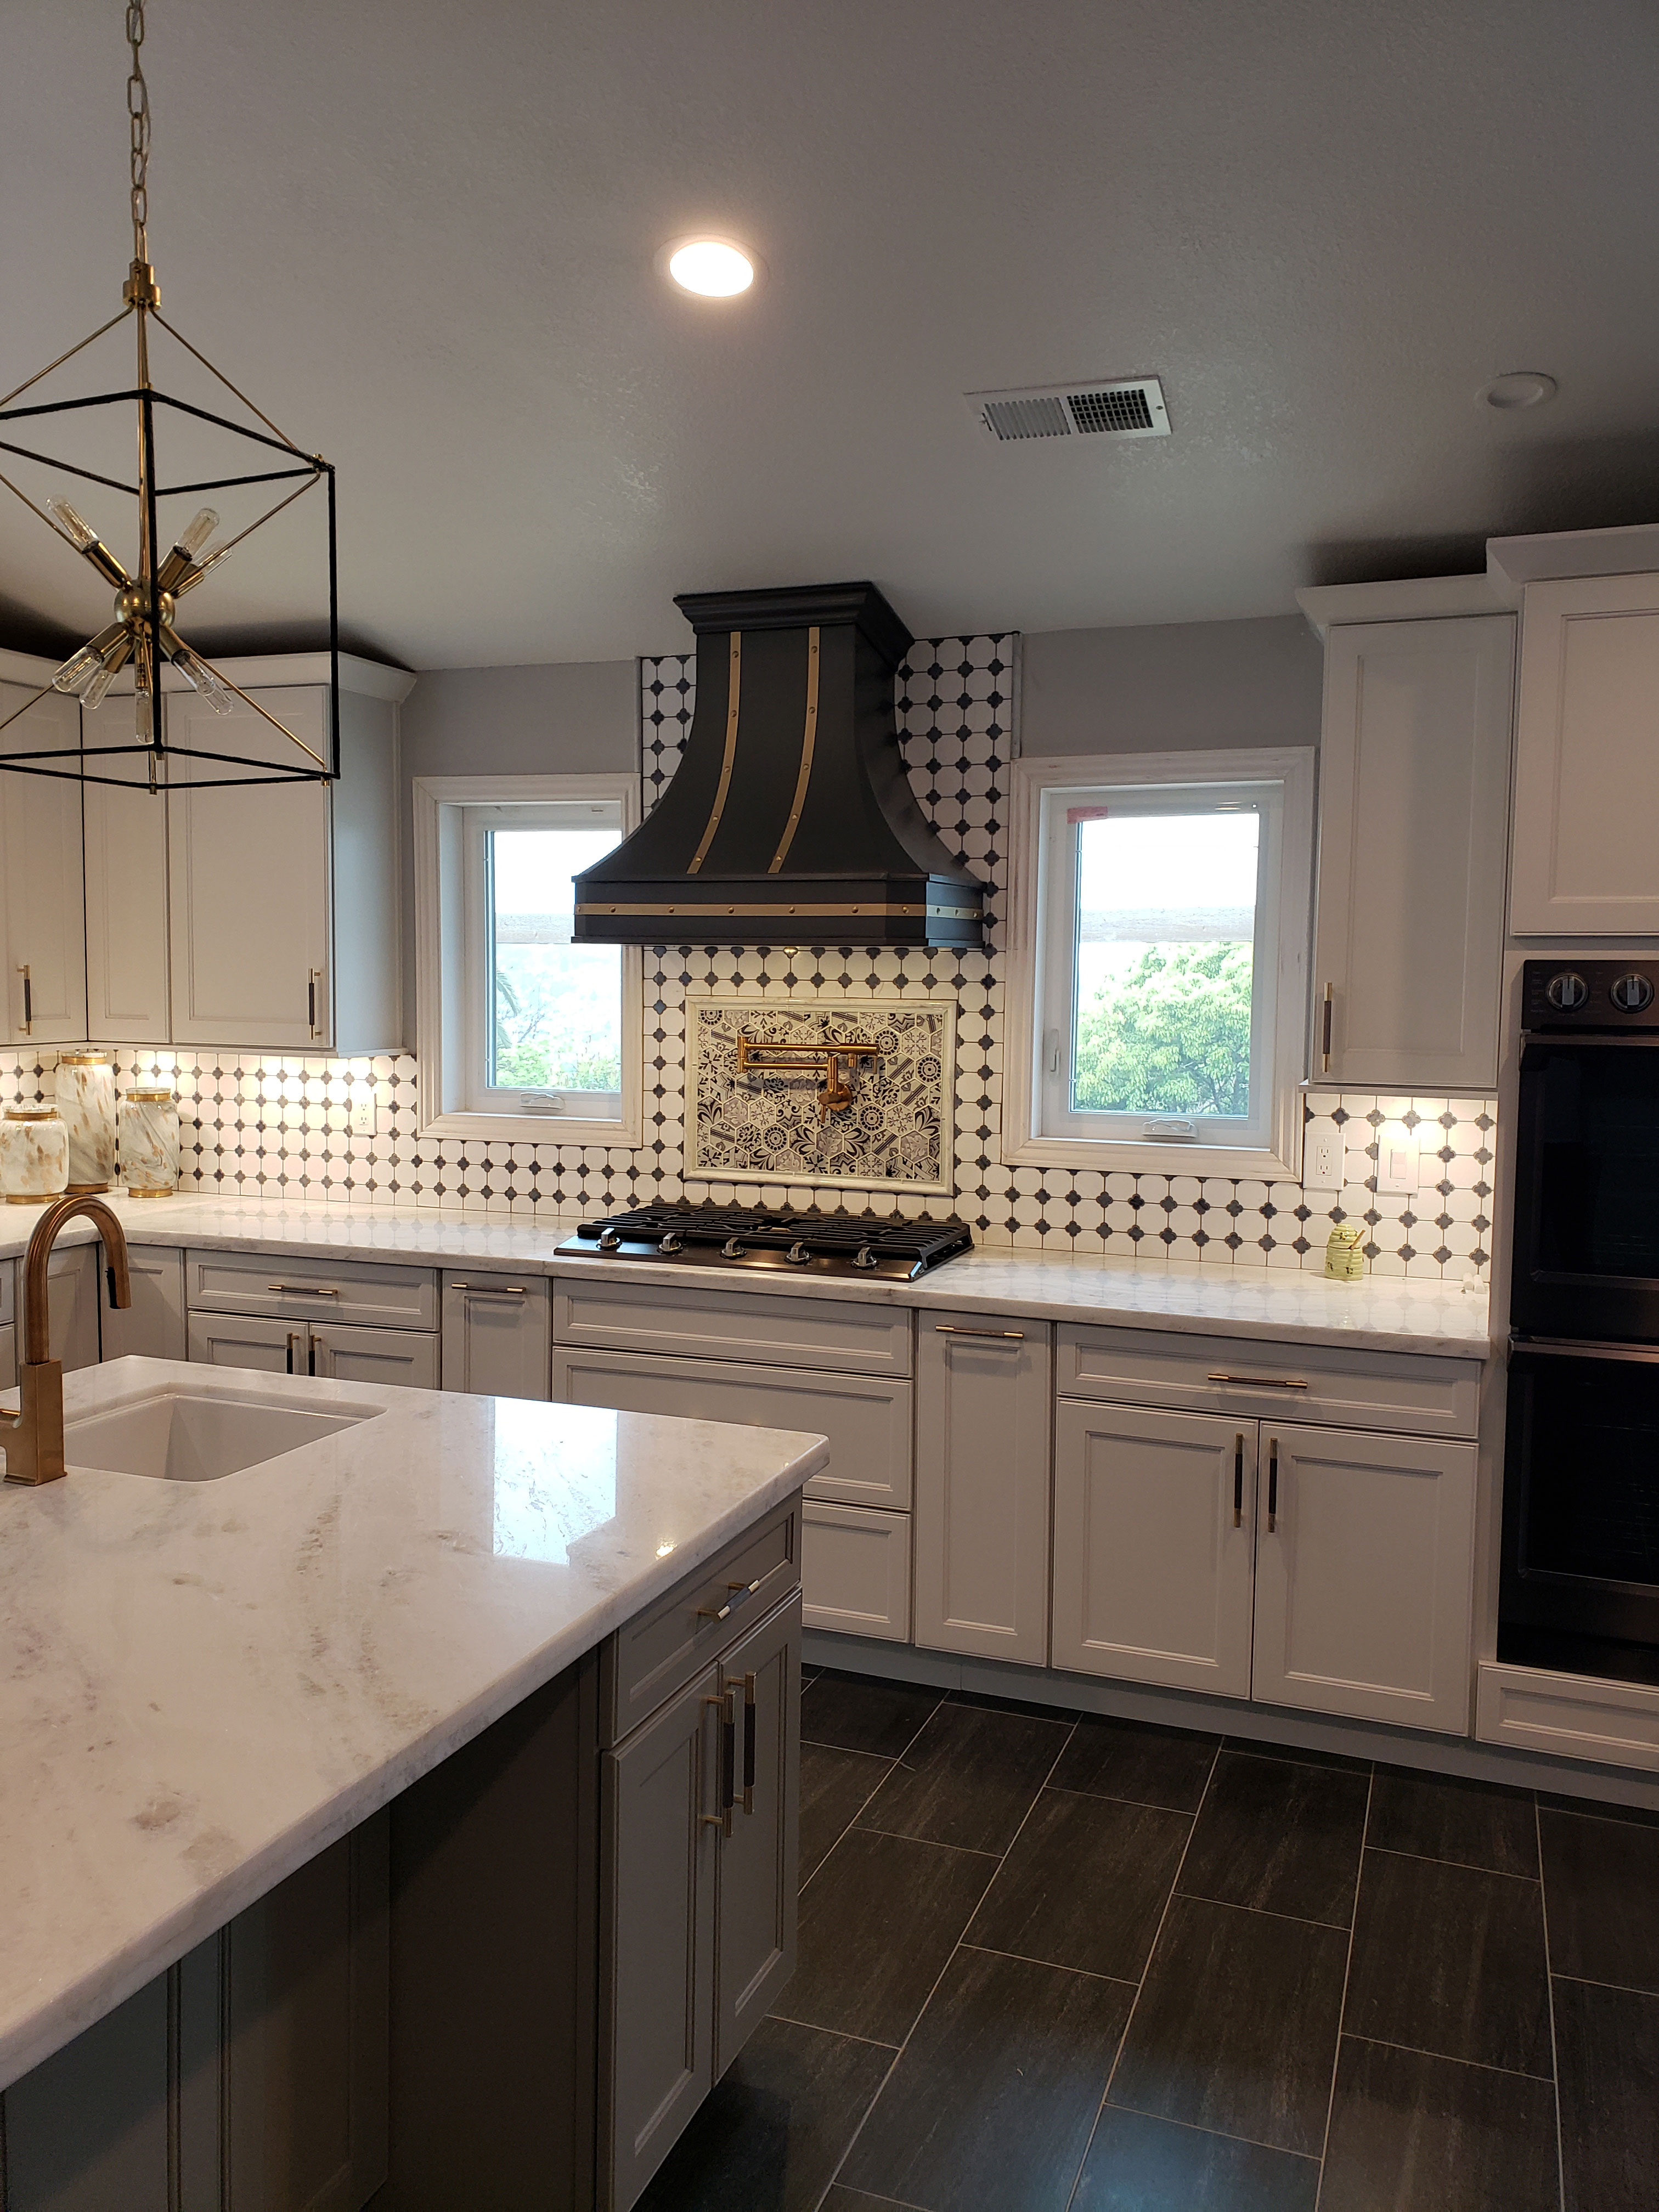 Enchanting kitchen design idea,white cabinets, marble countertops, stunning marble backsplash with range hood